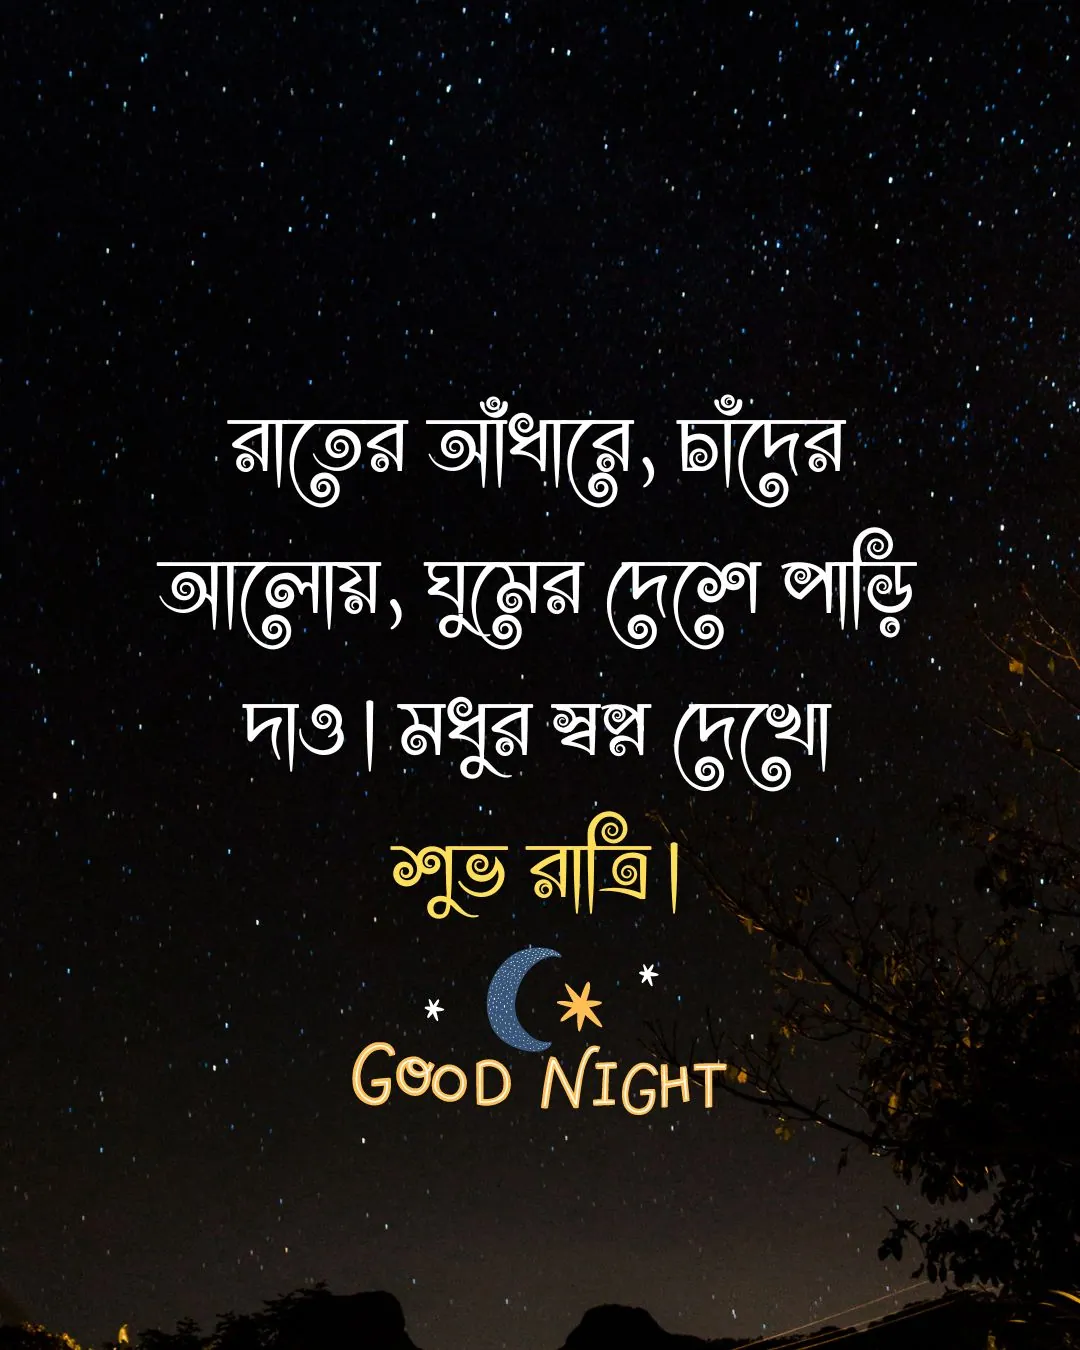 Good night in bengali - শুভ রাত্রি শুভেচ্ছা